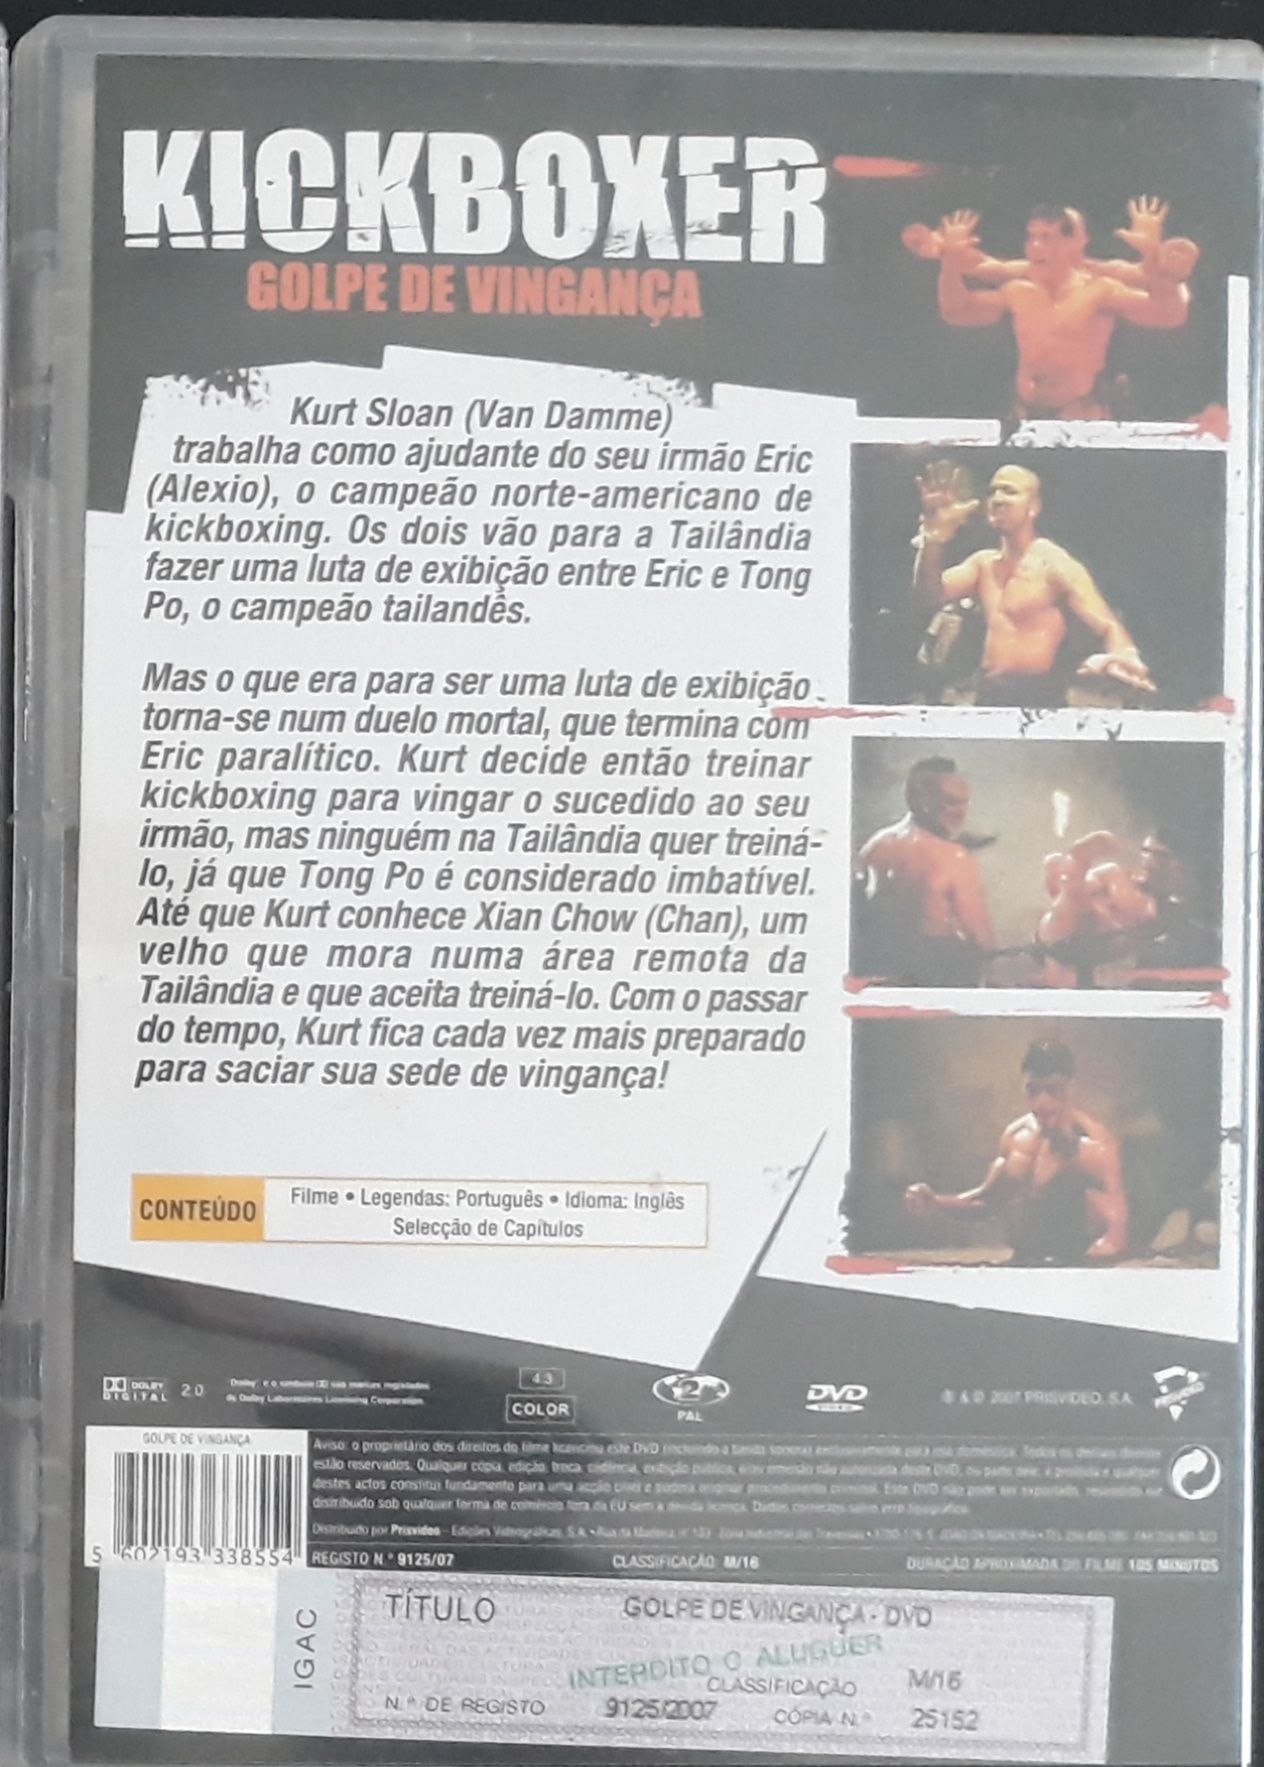 DVD Kickboxer Golpe de Vingança com Van Damme